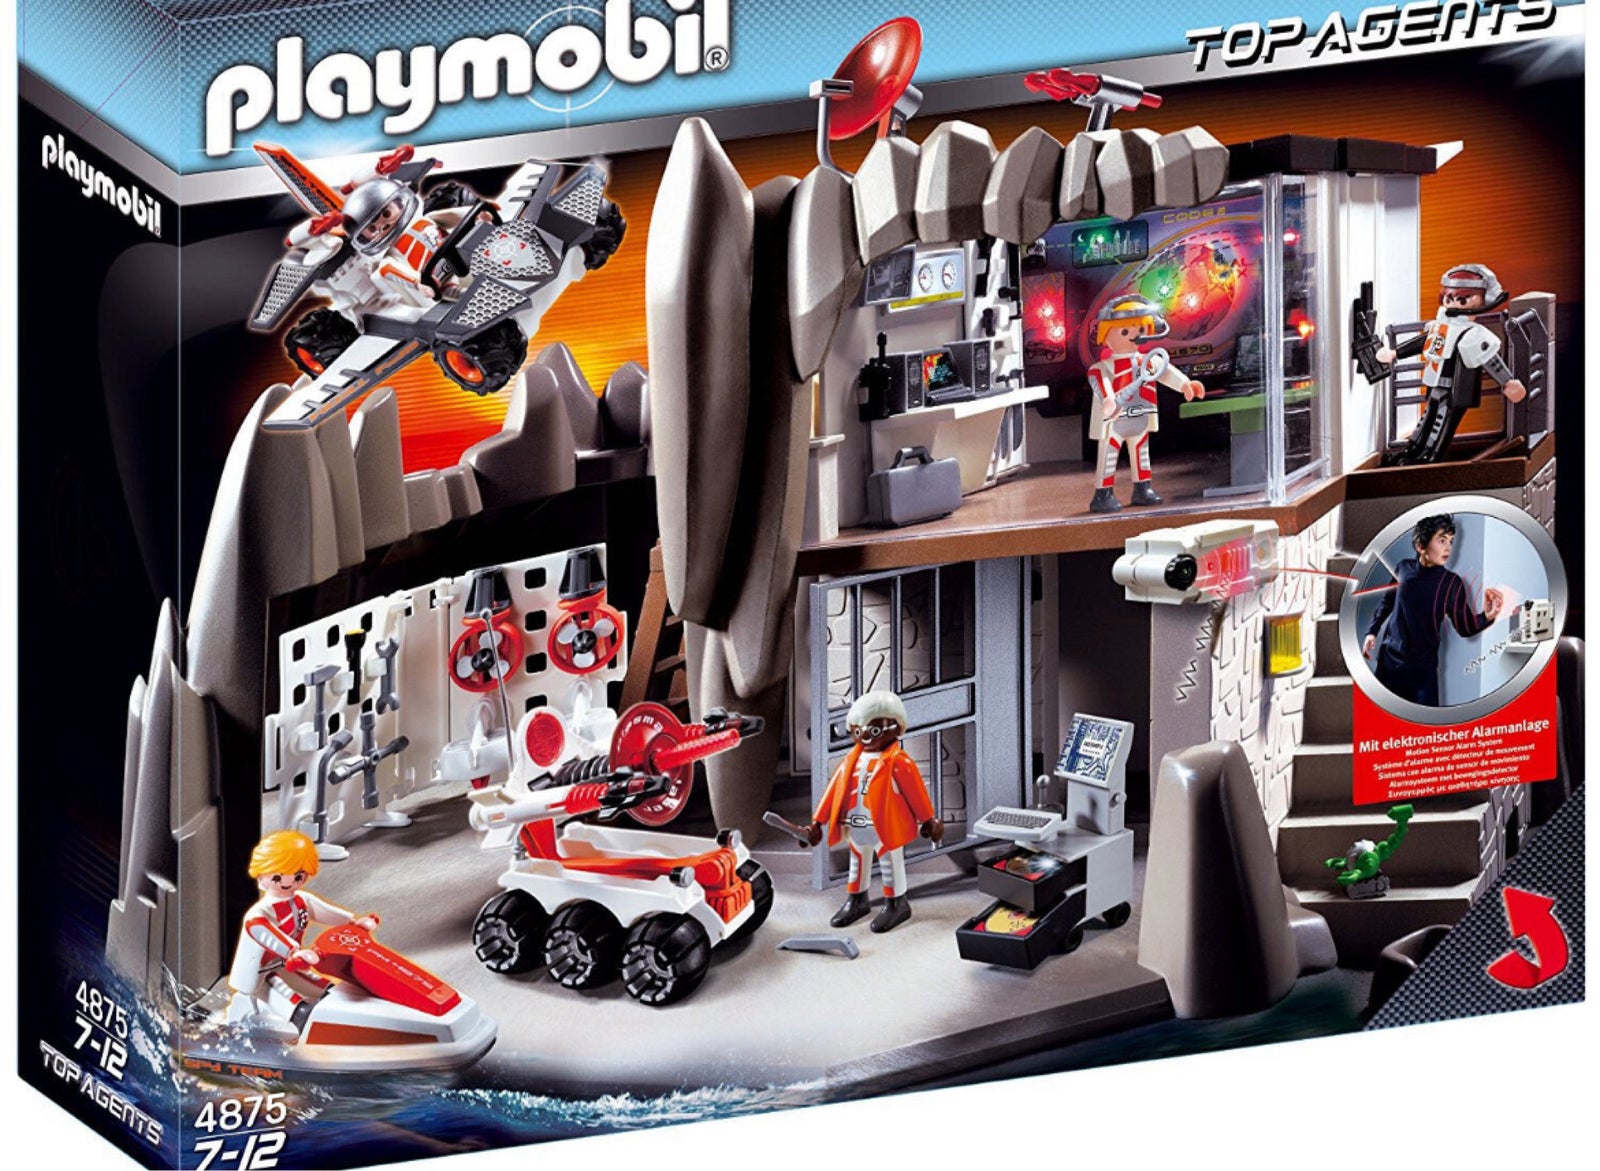 Playmobil, Playmobil top agent HQ, Playmobil